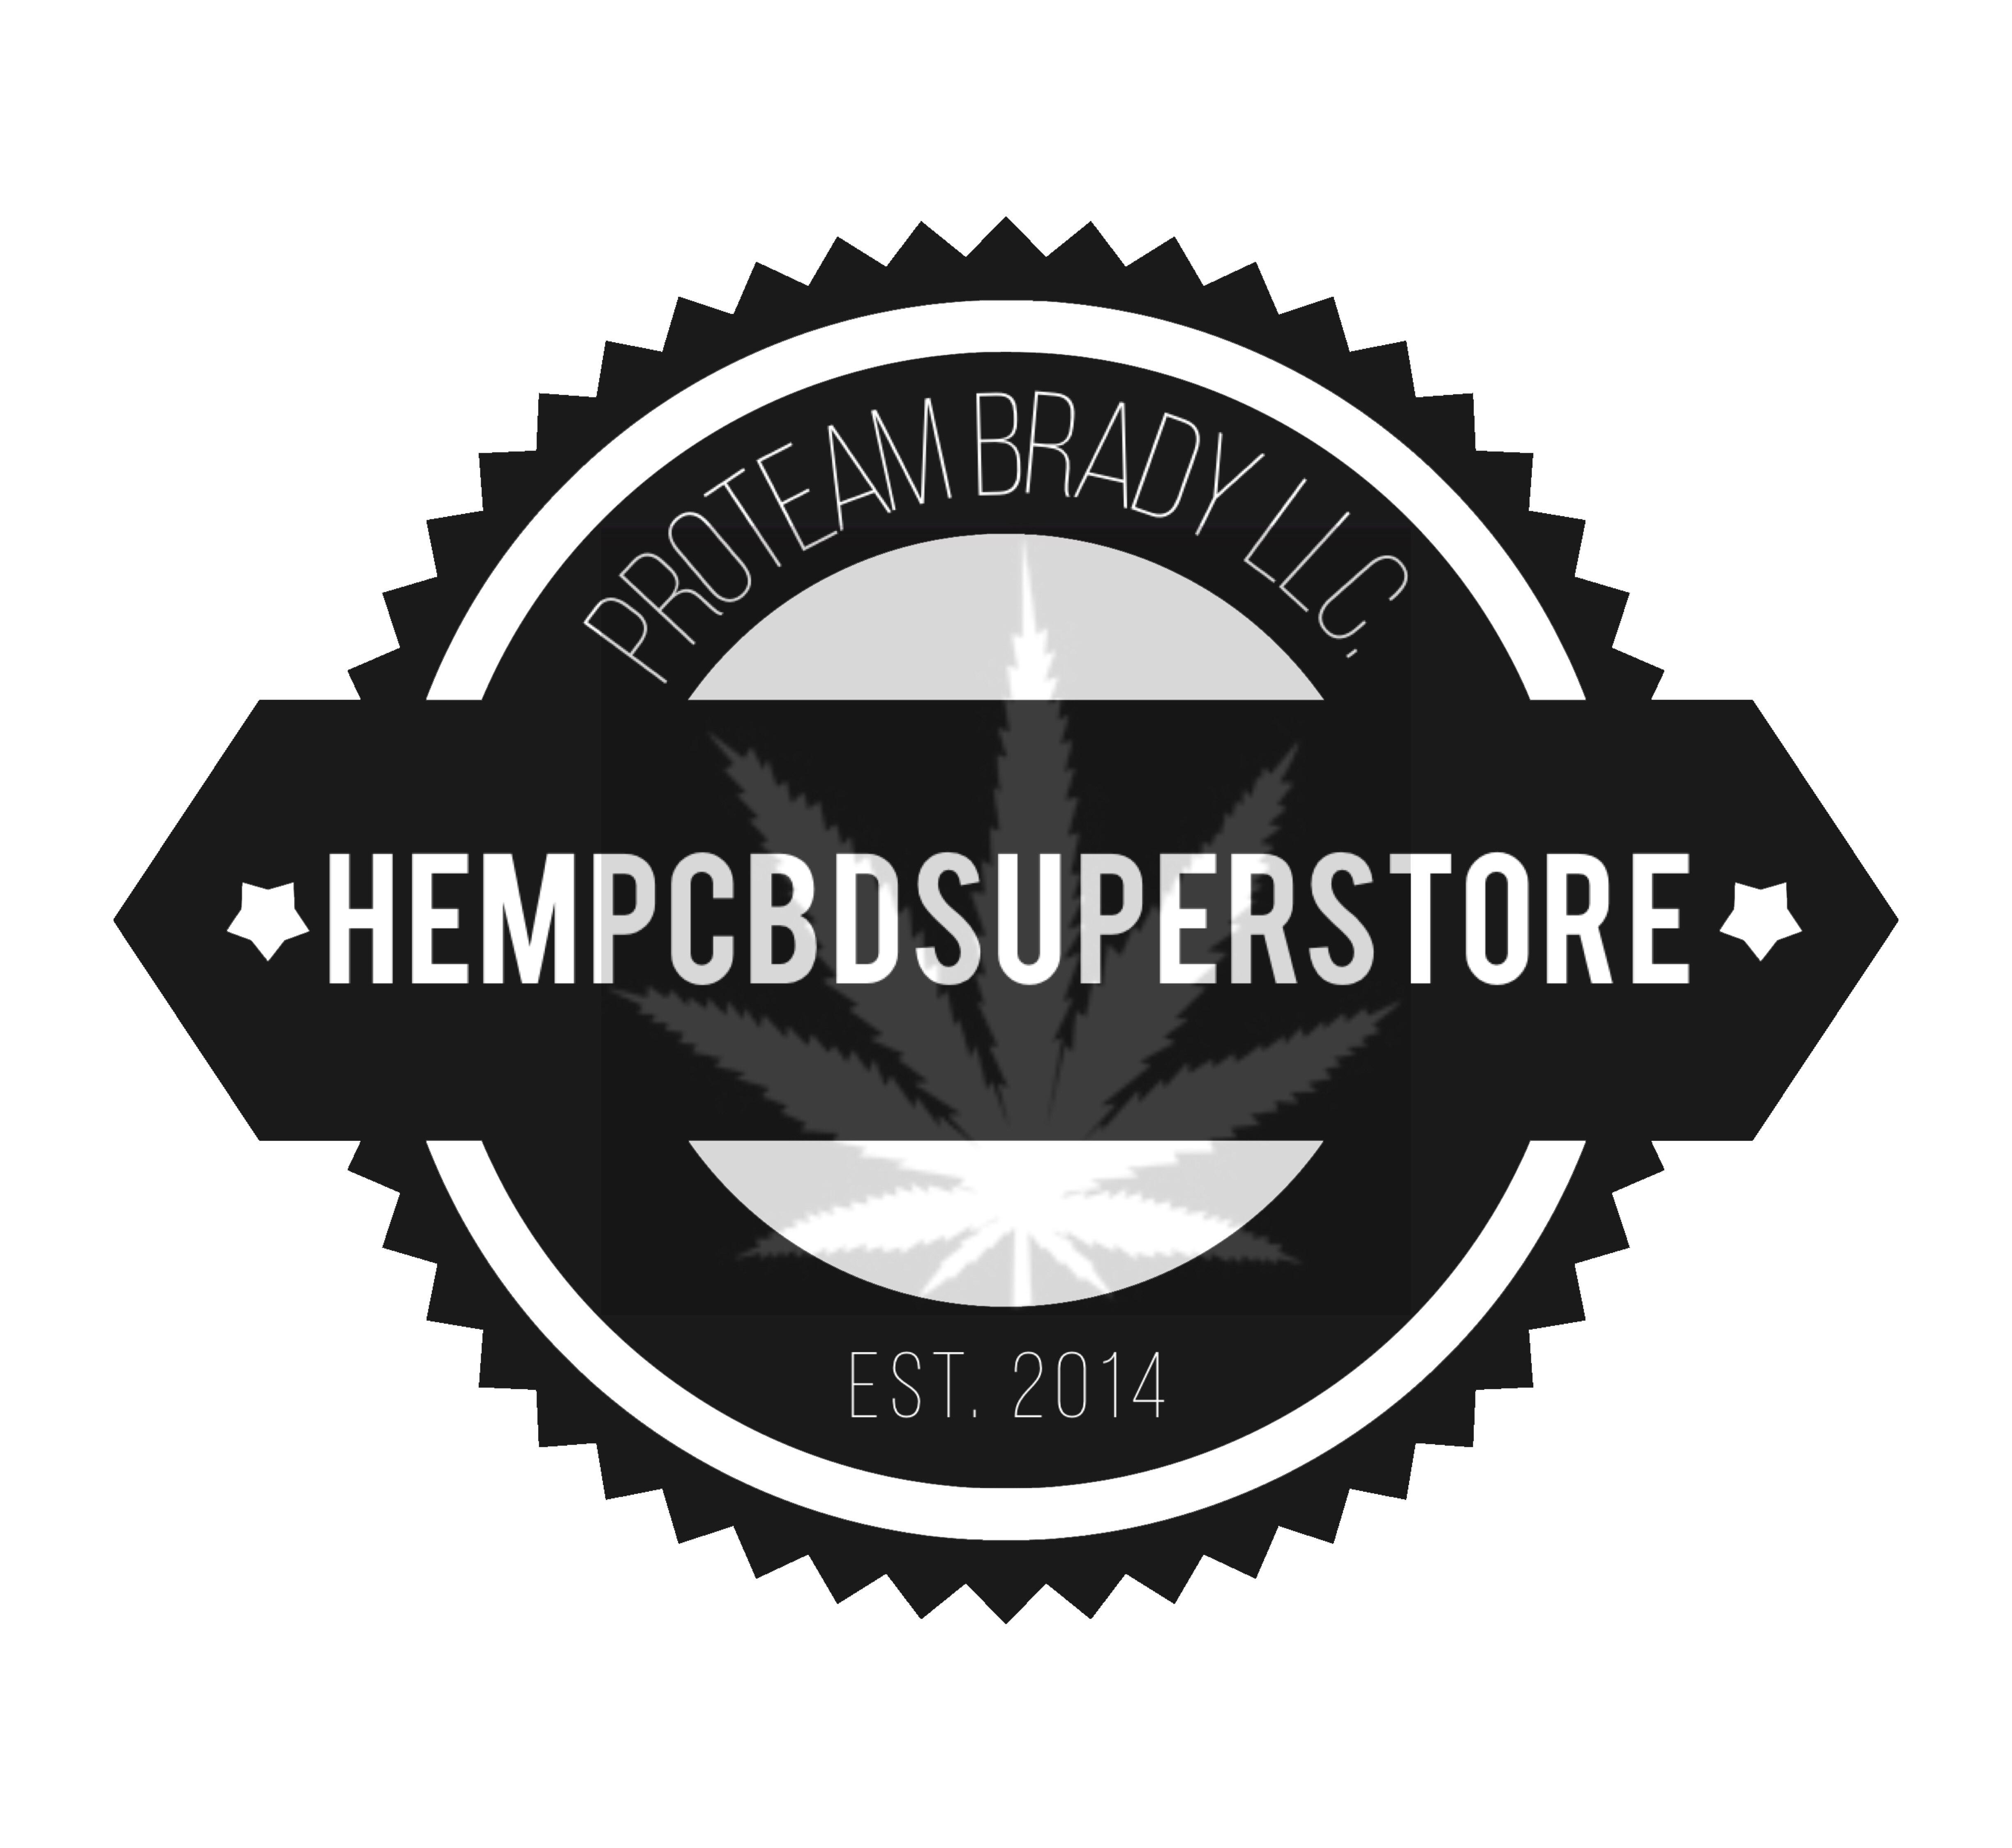 Hemp CBD Superstore - Proteam Brady